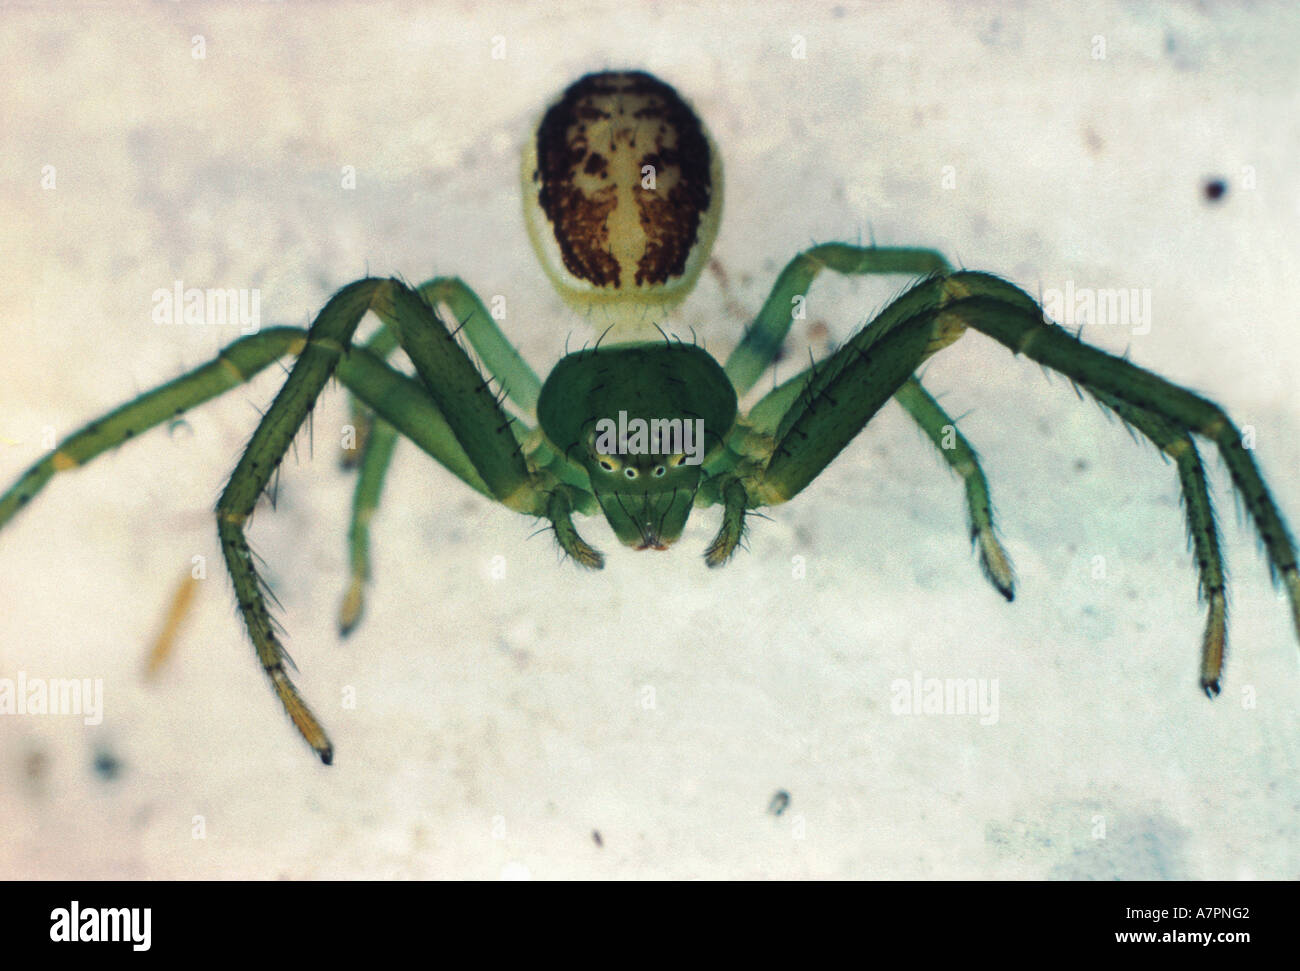 green crab spider (Diaea dorsata), portrait, frontal Stock Photo